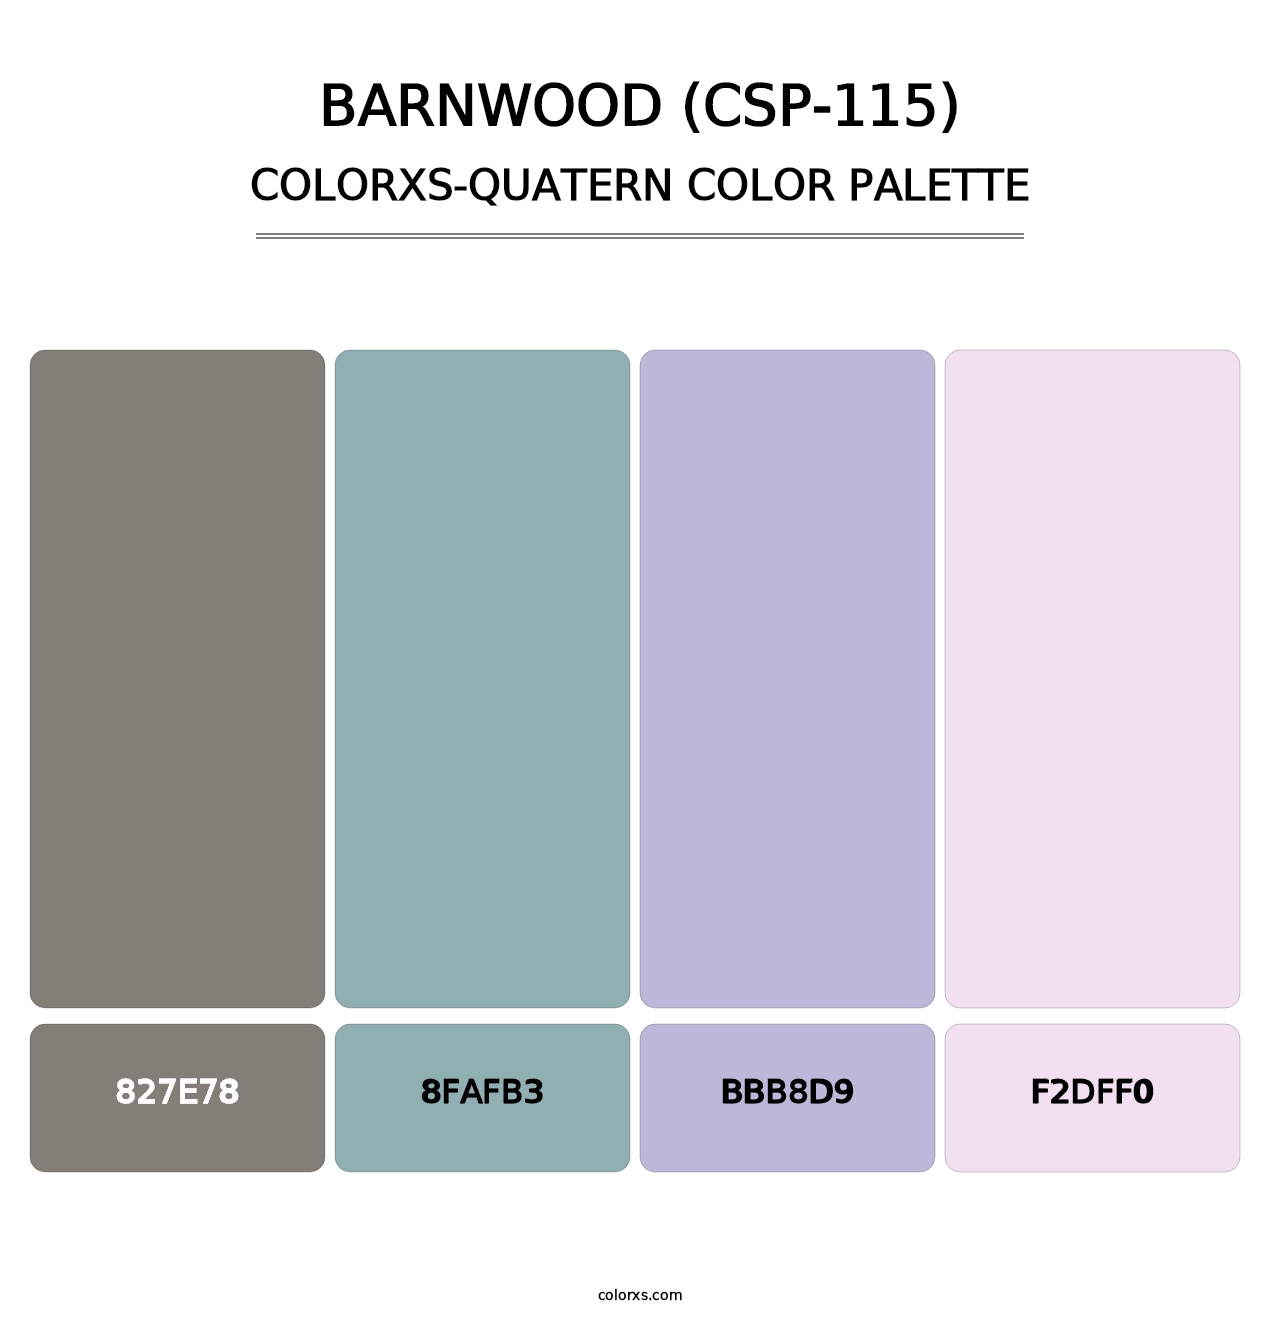 Barnwood (CSP-115) - Colorxs Quatern Palette